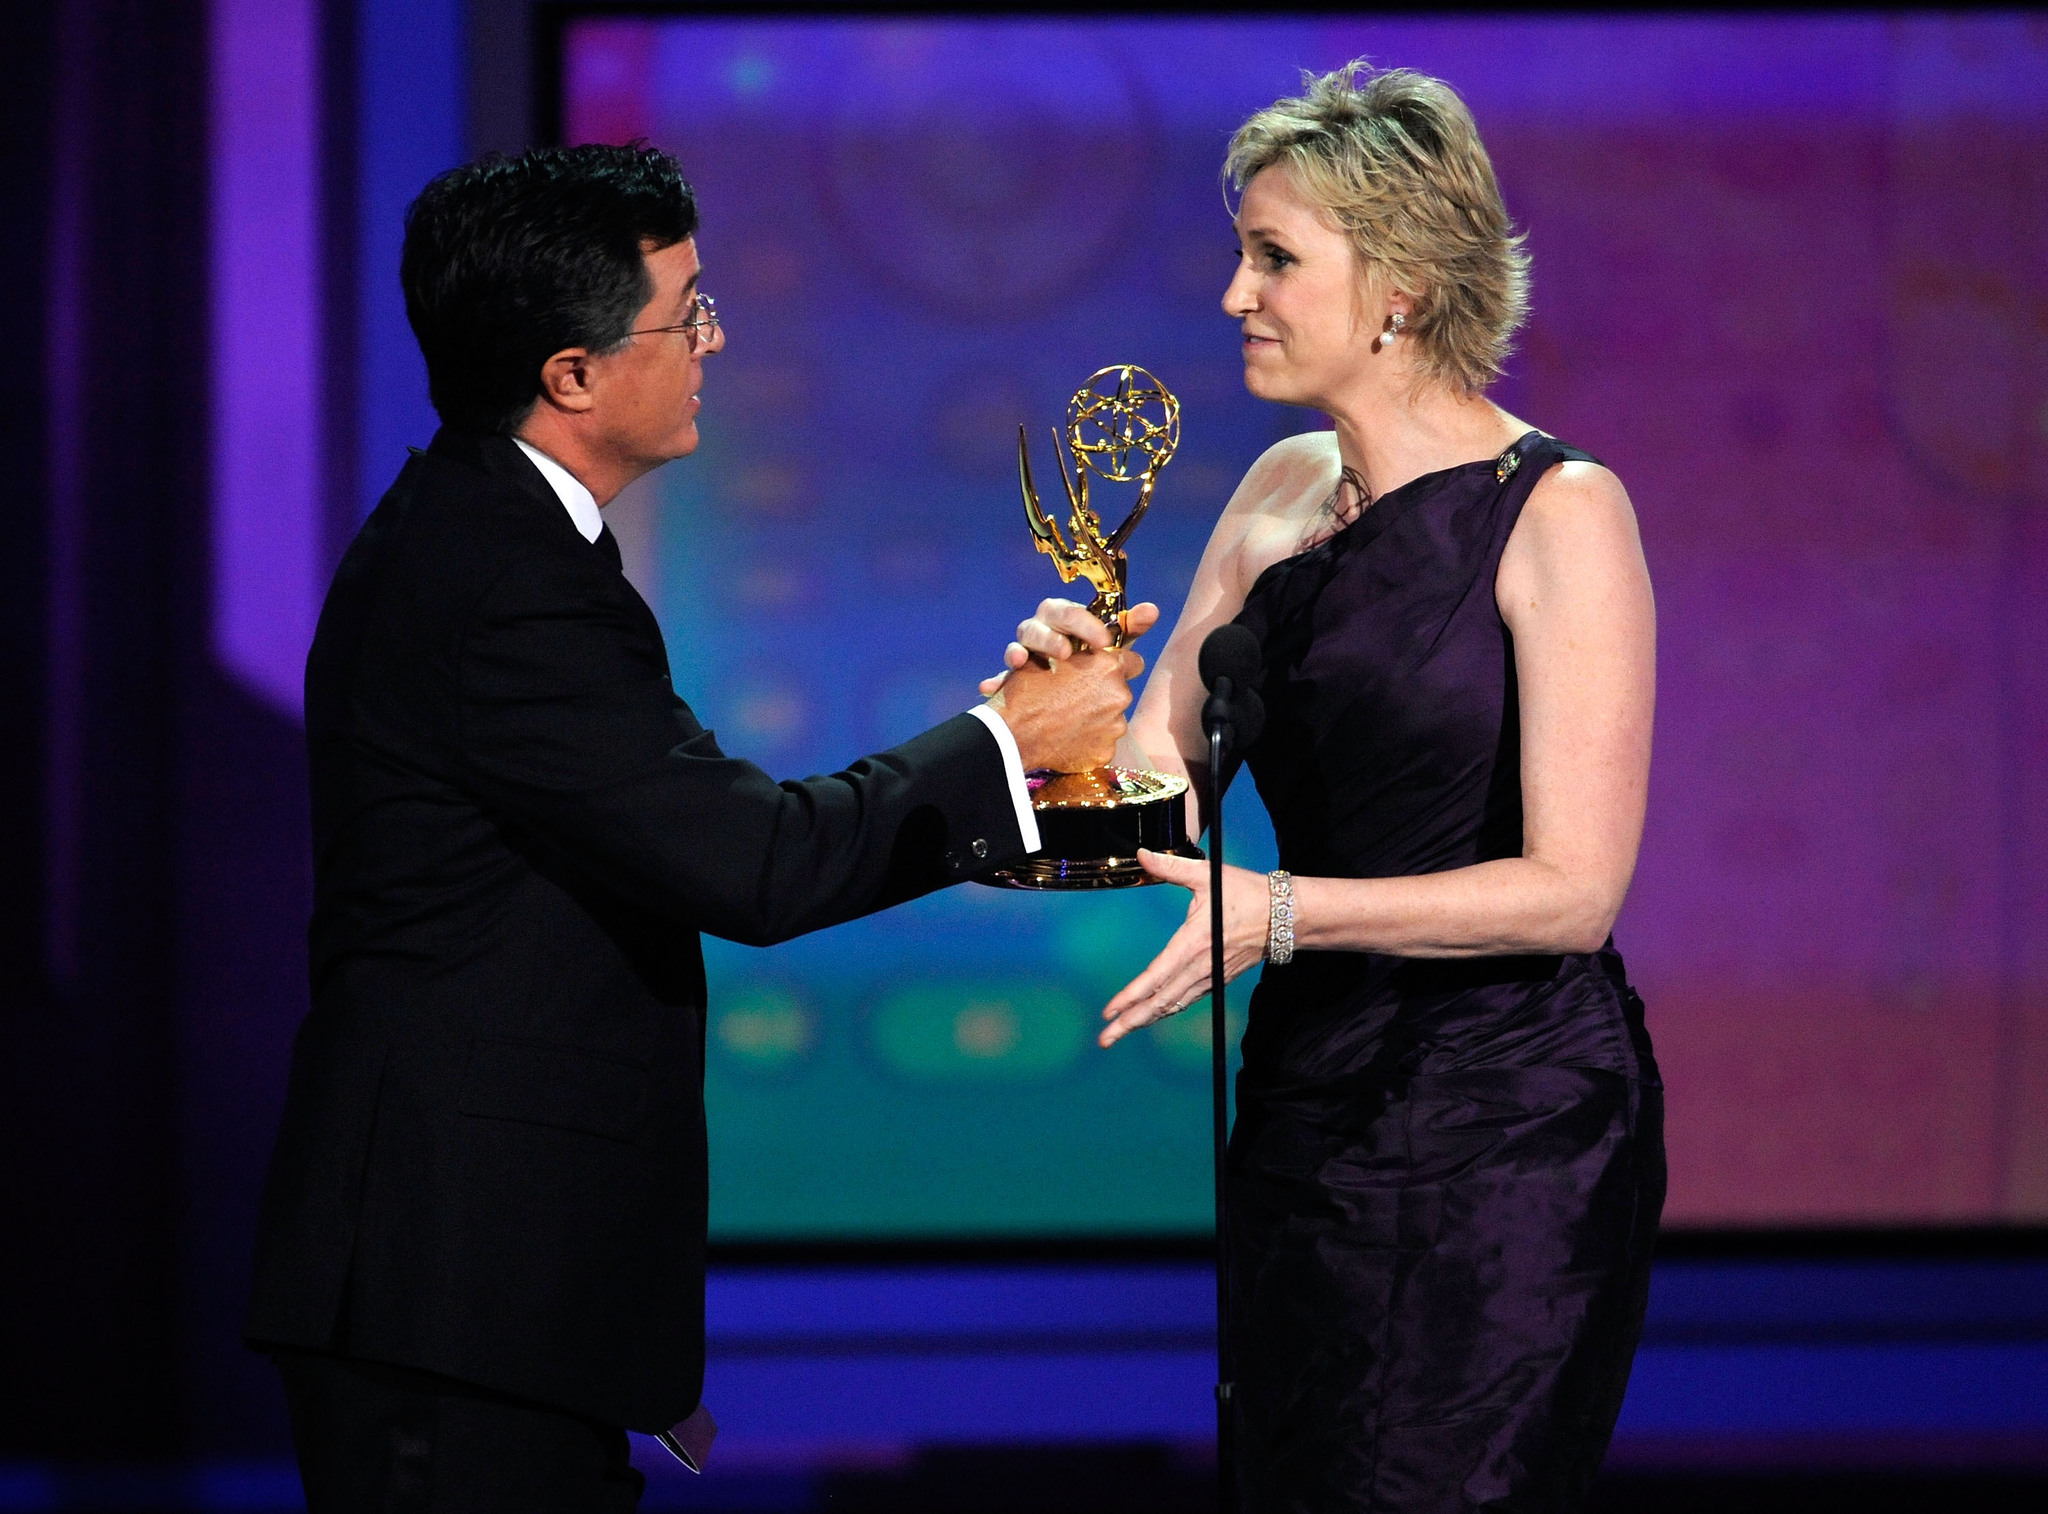 Stephen Colbert and Jane Lynch